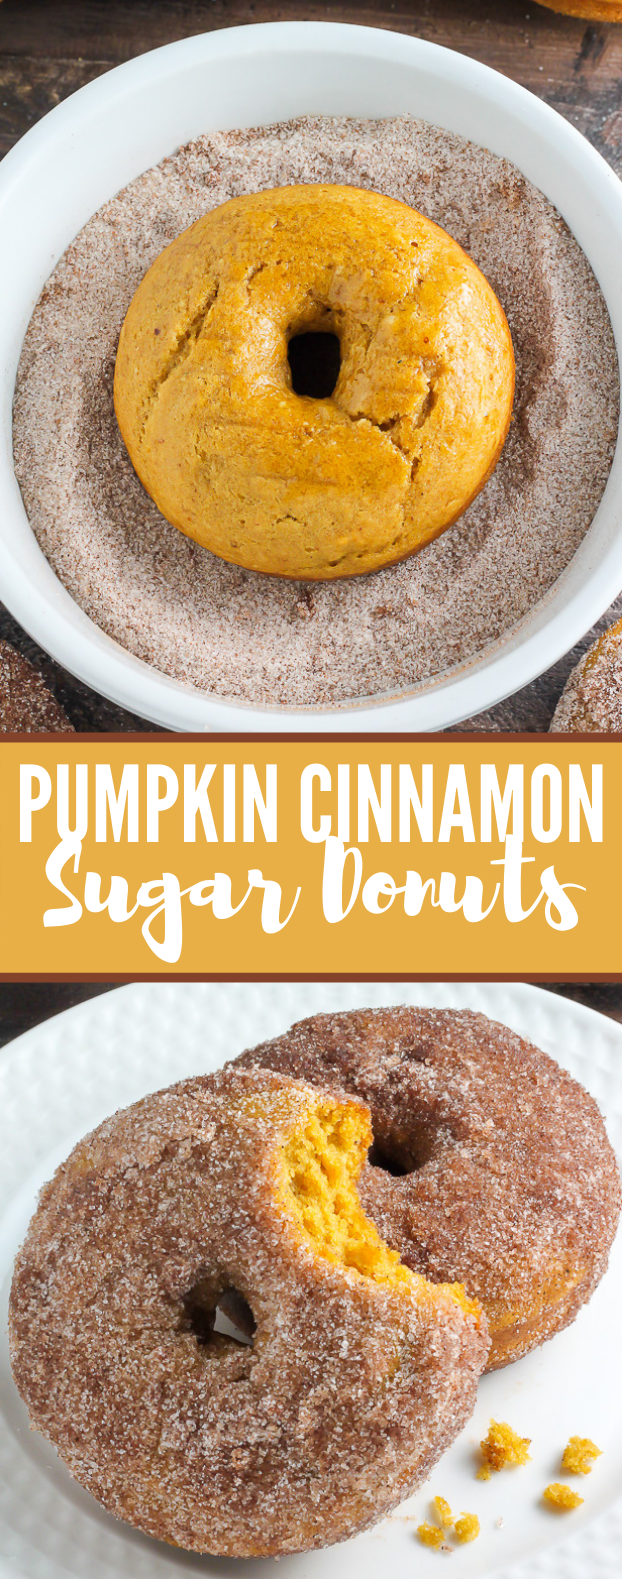 Pumpkin Cinnamon Sugar Donuts (Includes vegan version) #desserts #sweets #donuts #vegan #cake